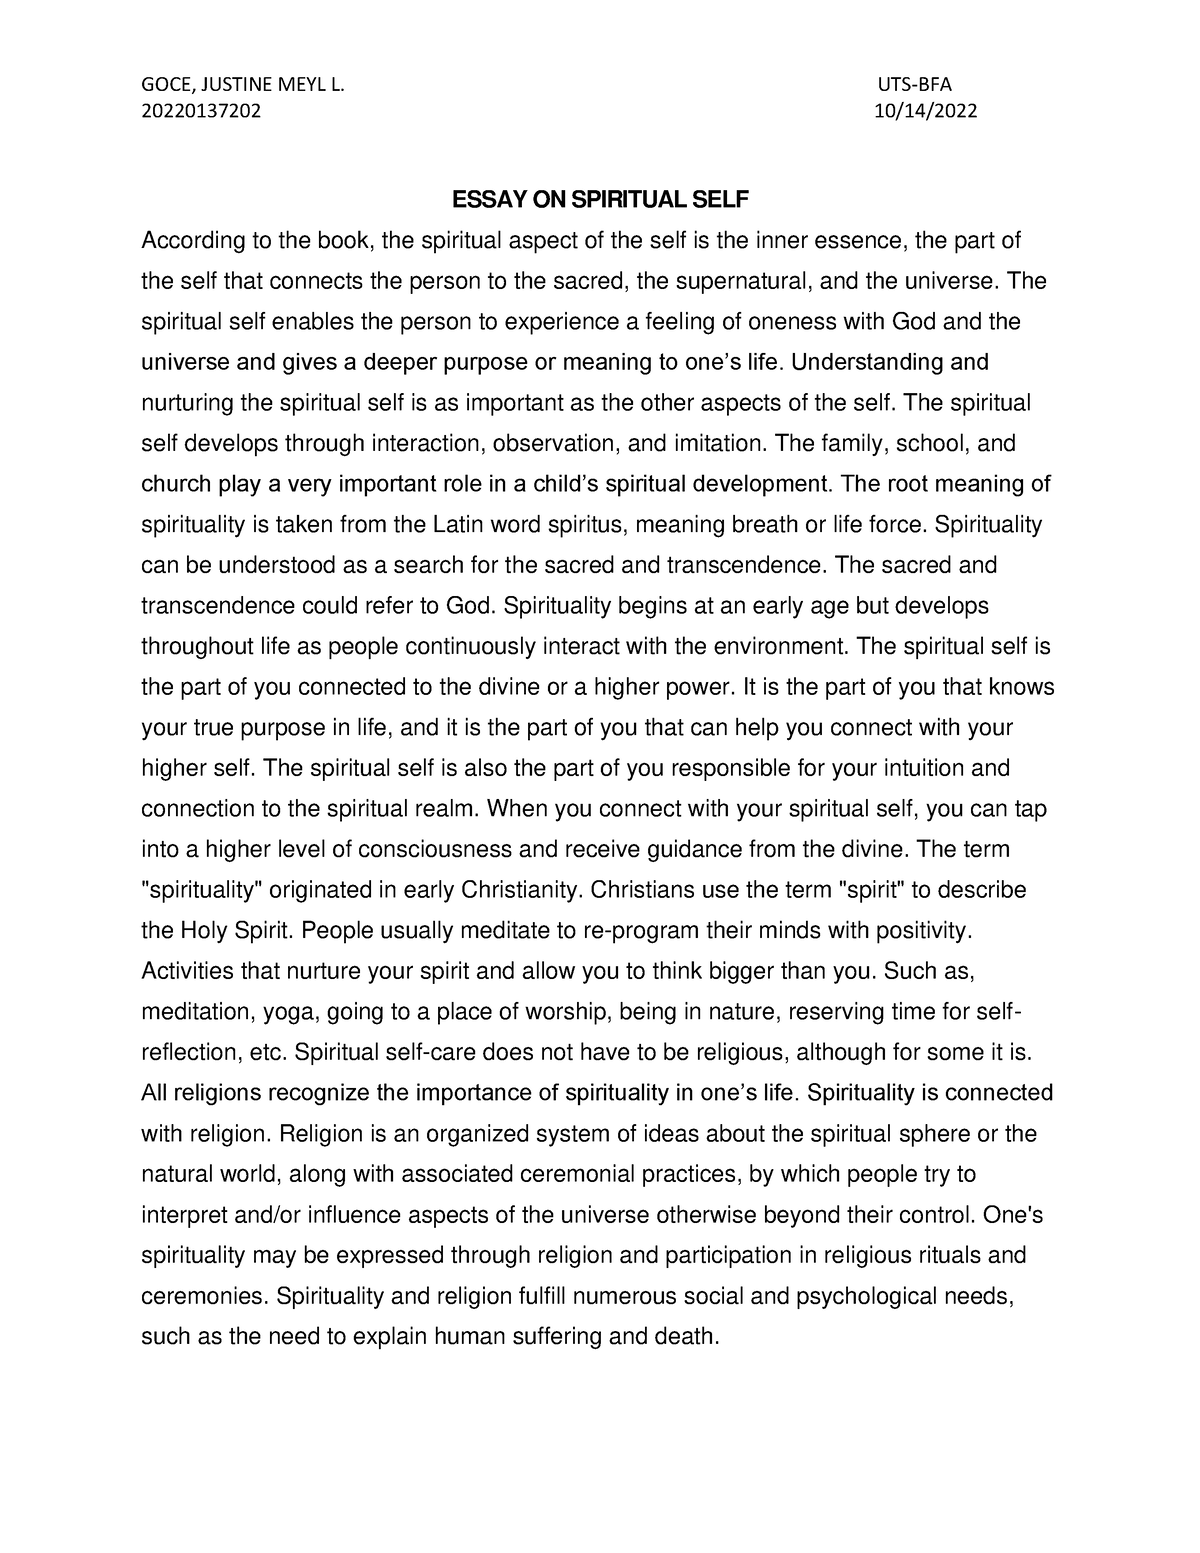 argumentative essay on spirituality